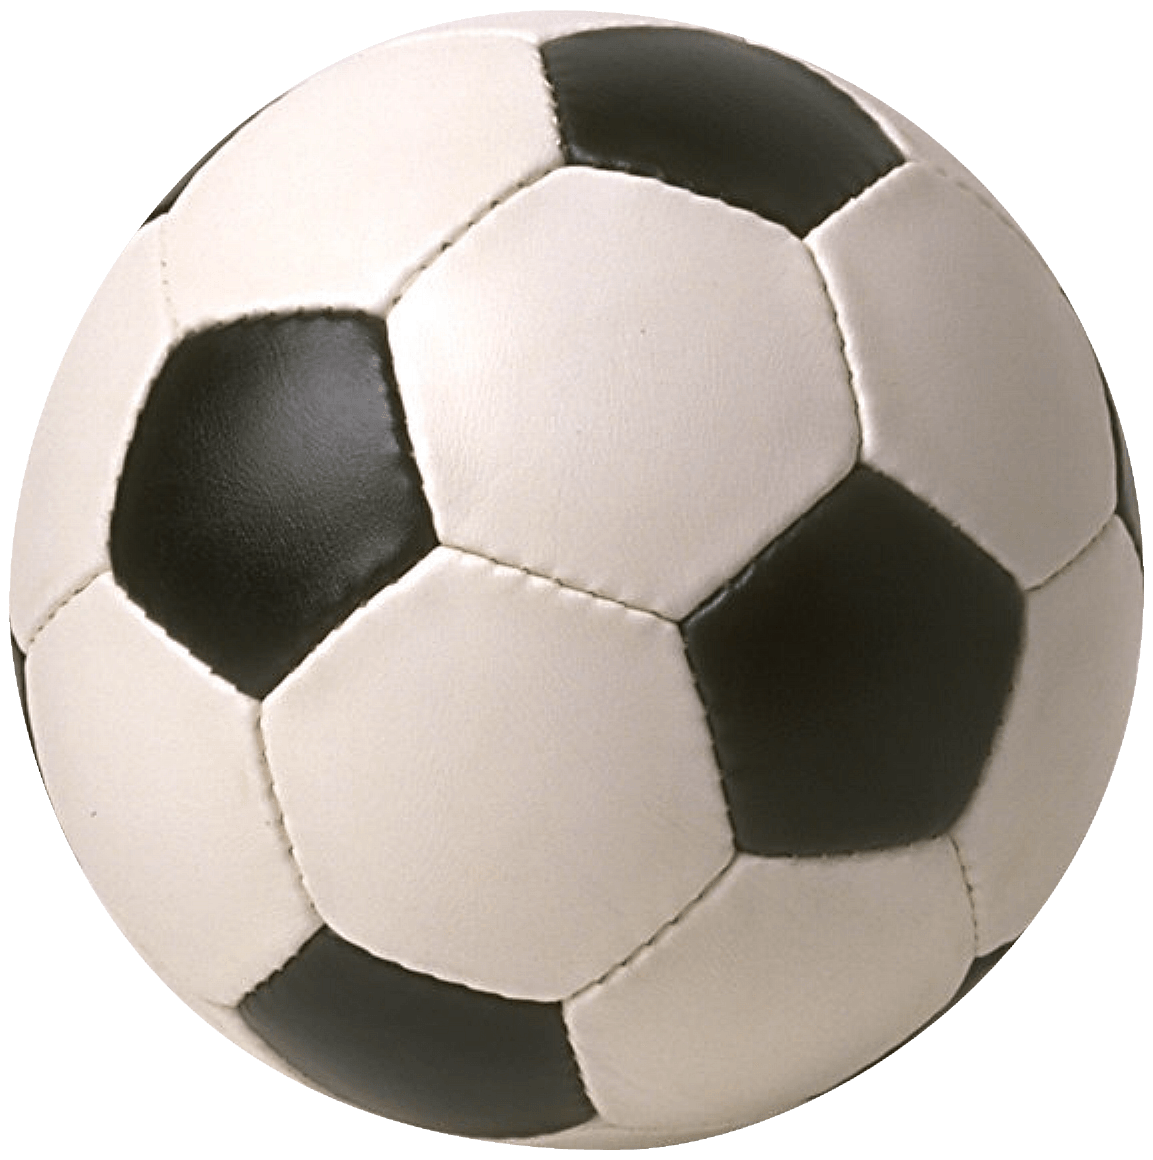 Football Ball Png Image PNG Image